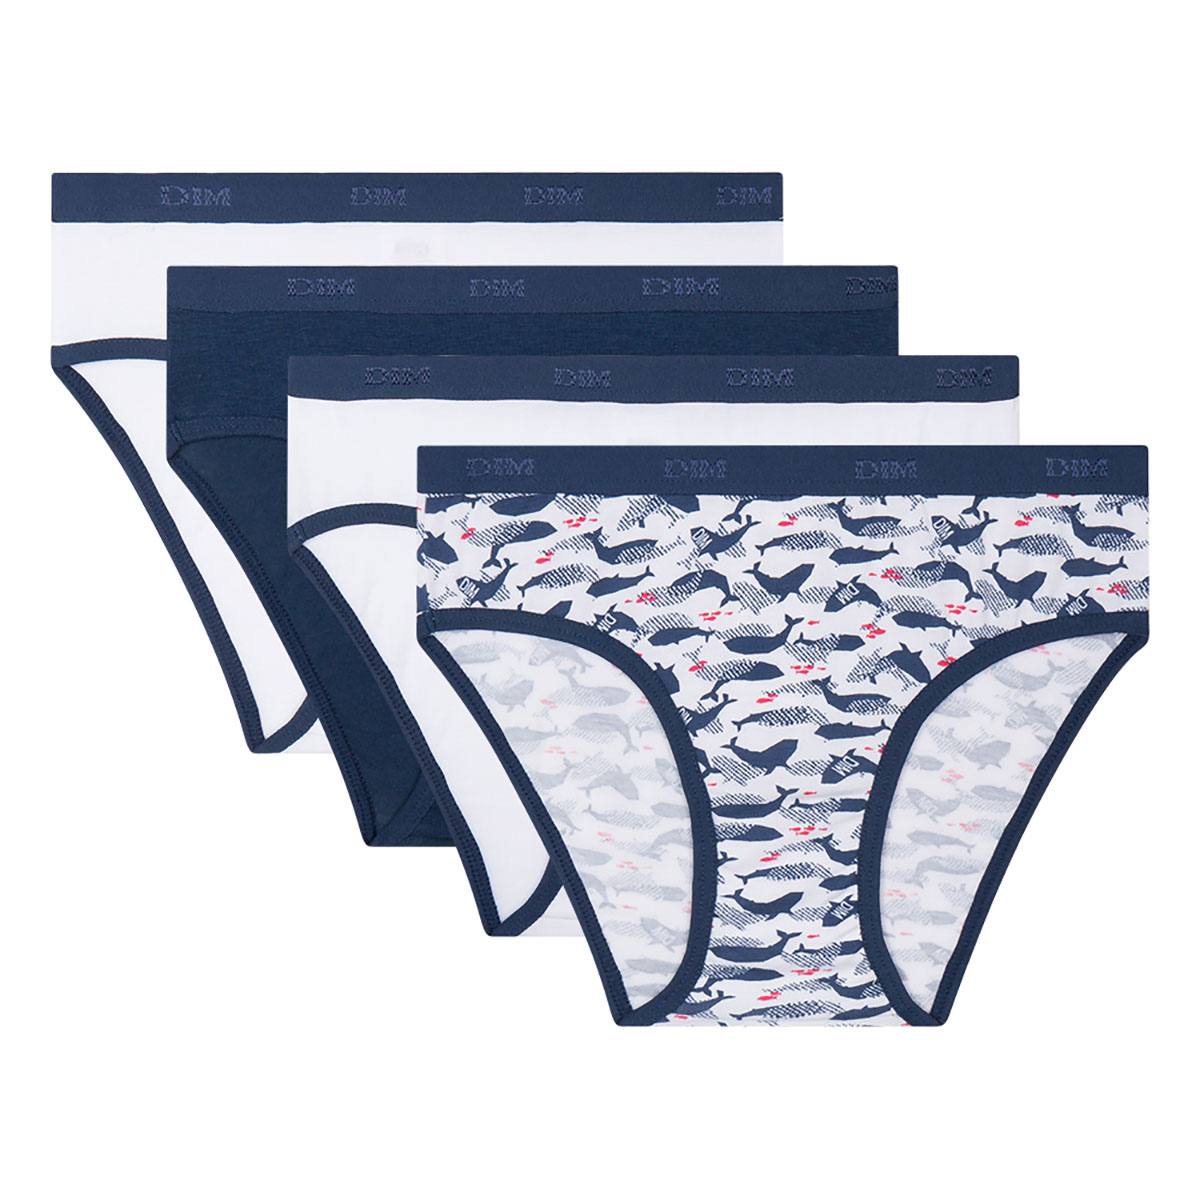 924 Gilman Women's Underwear / Booty Shorts